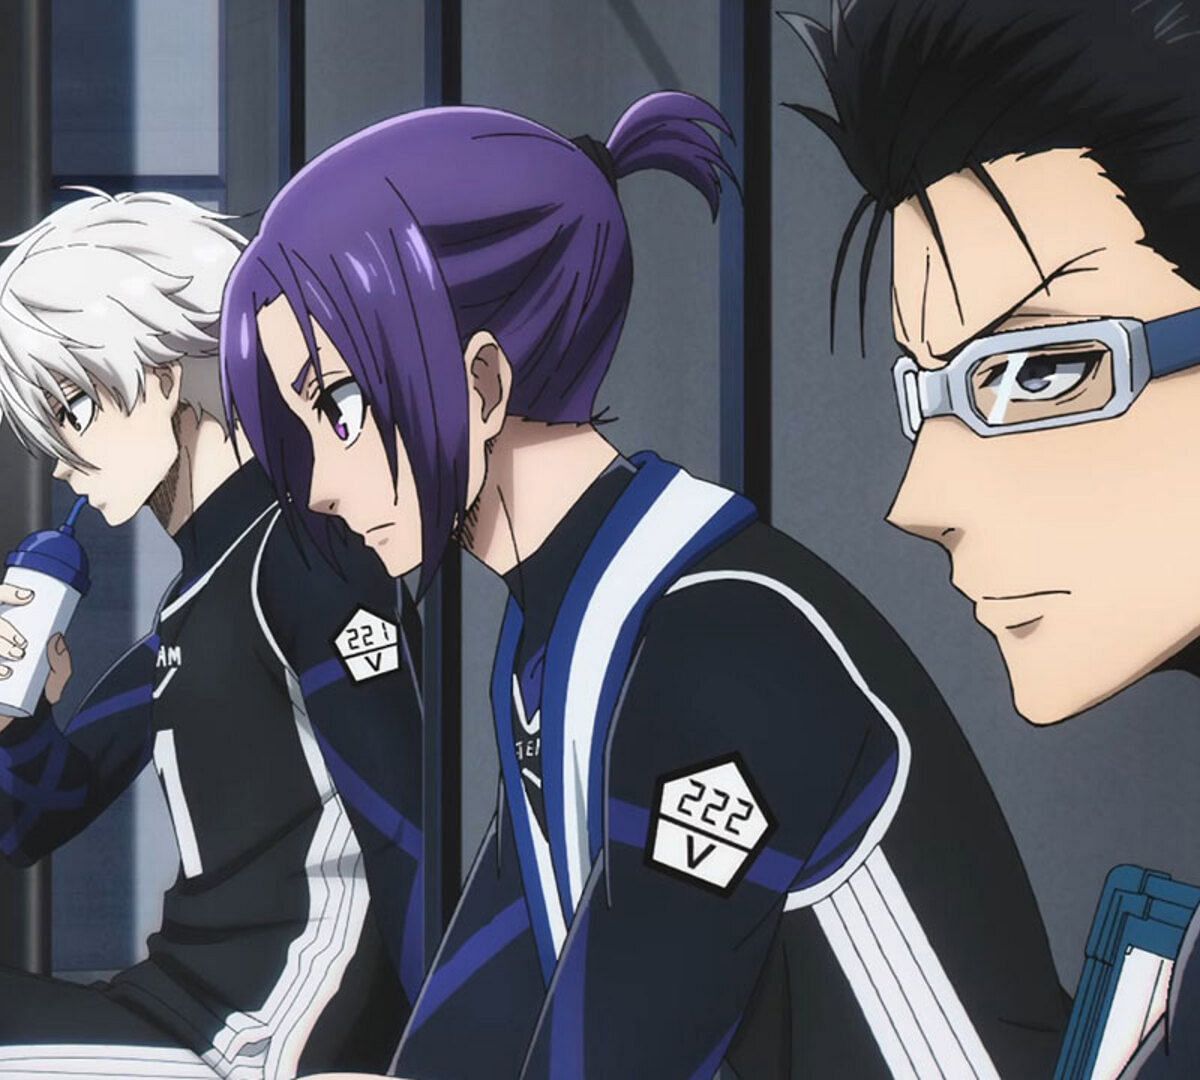 Team V as seen in the anime (Image via 8bit studio)